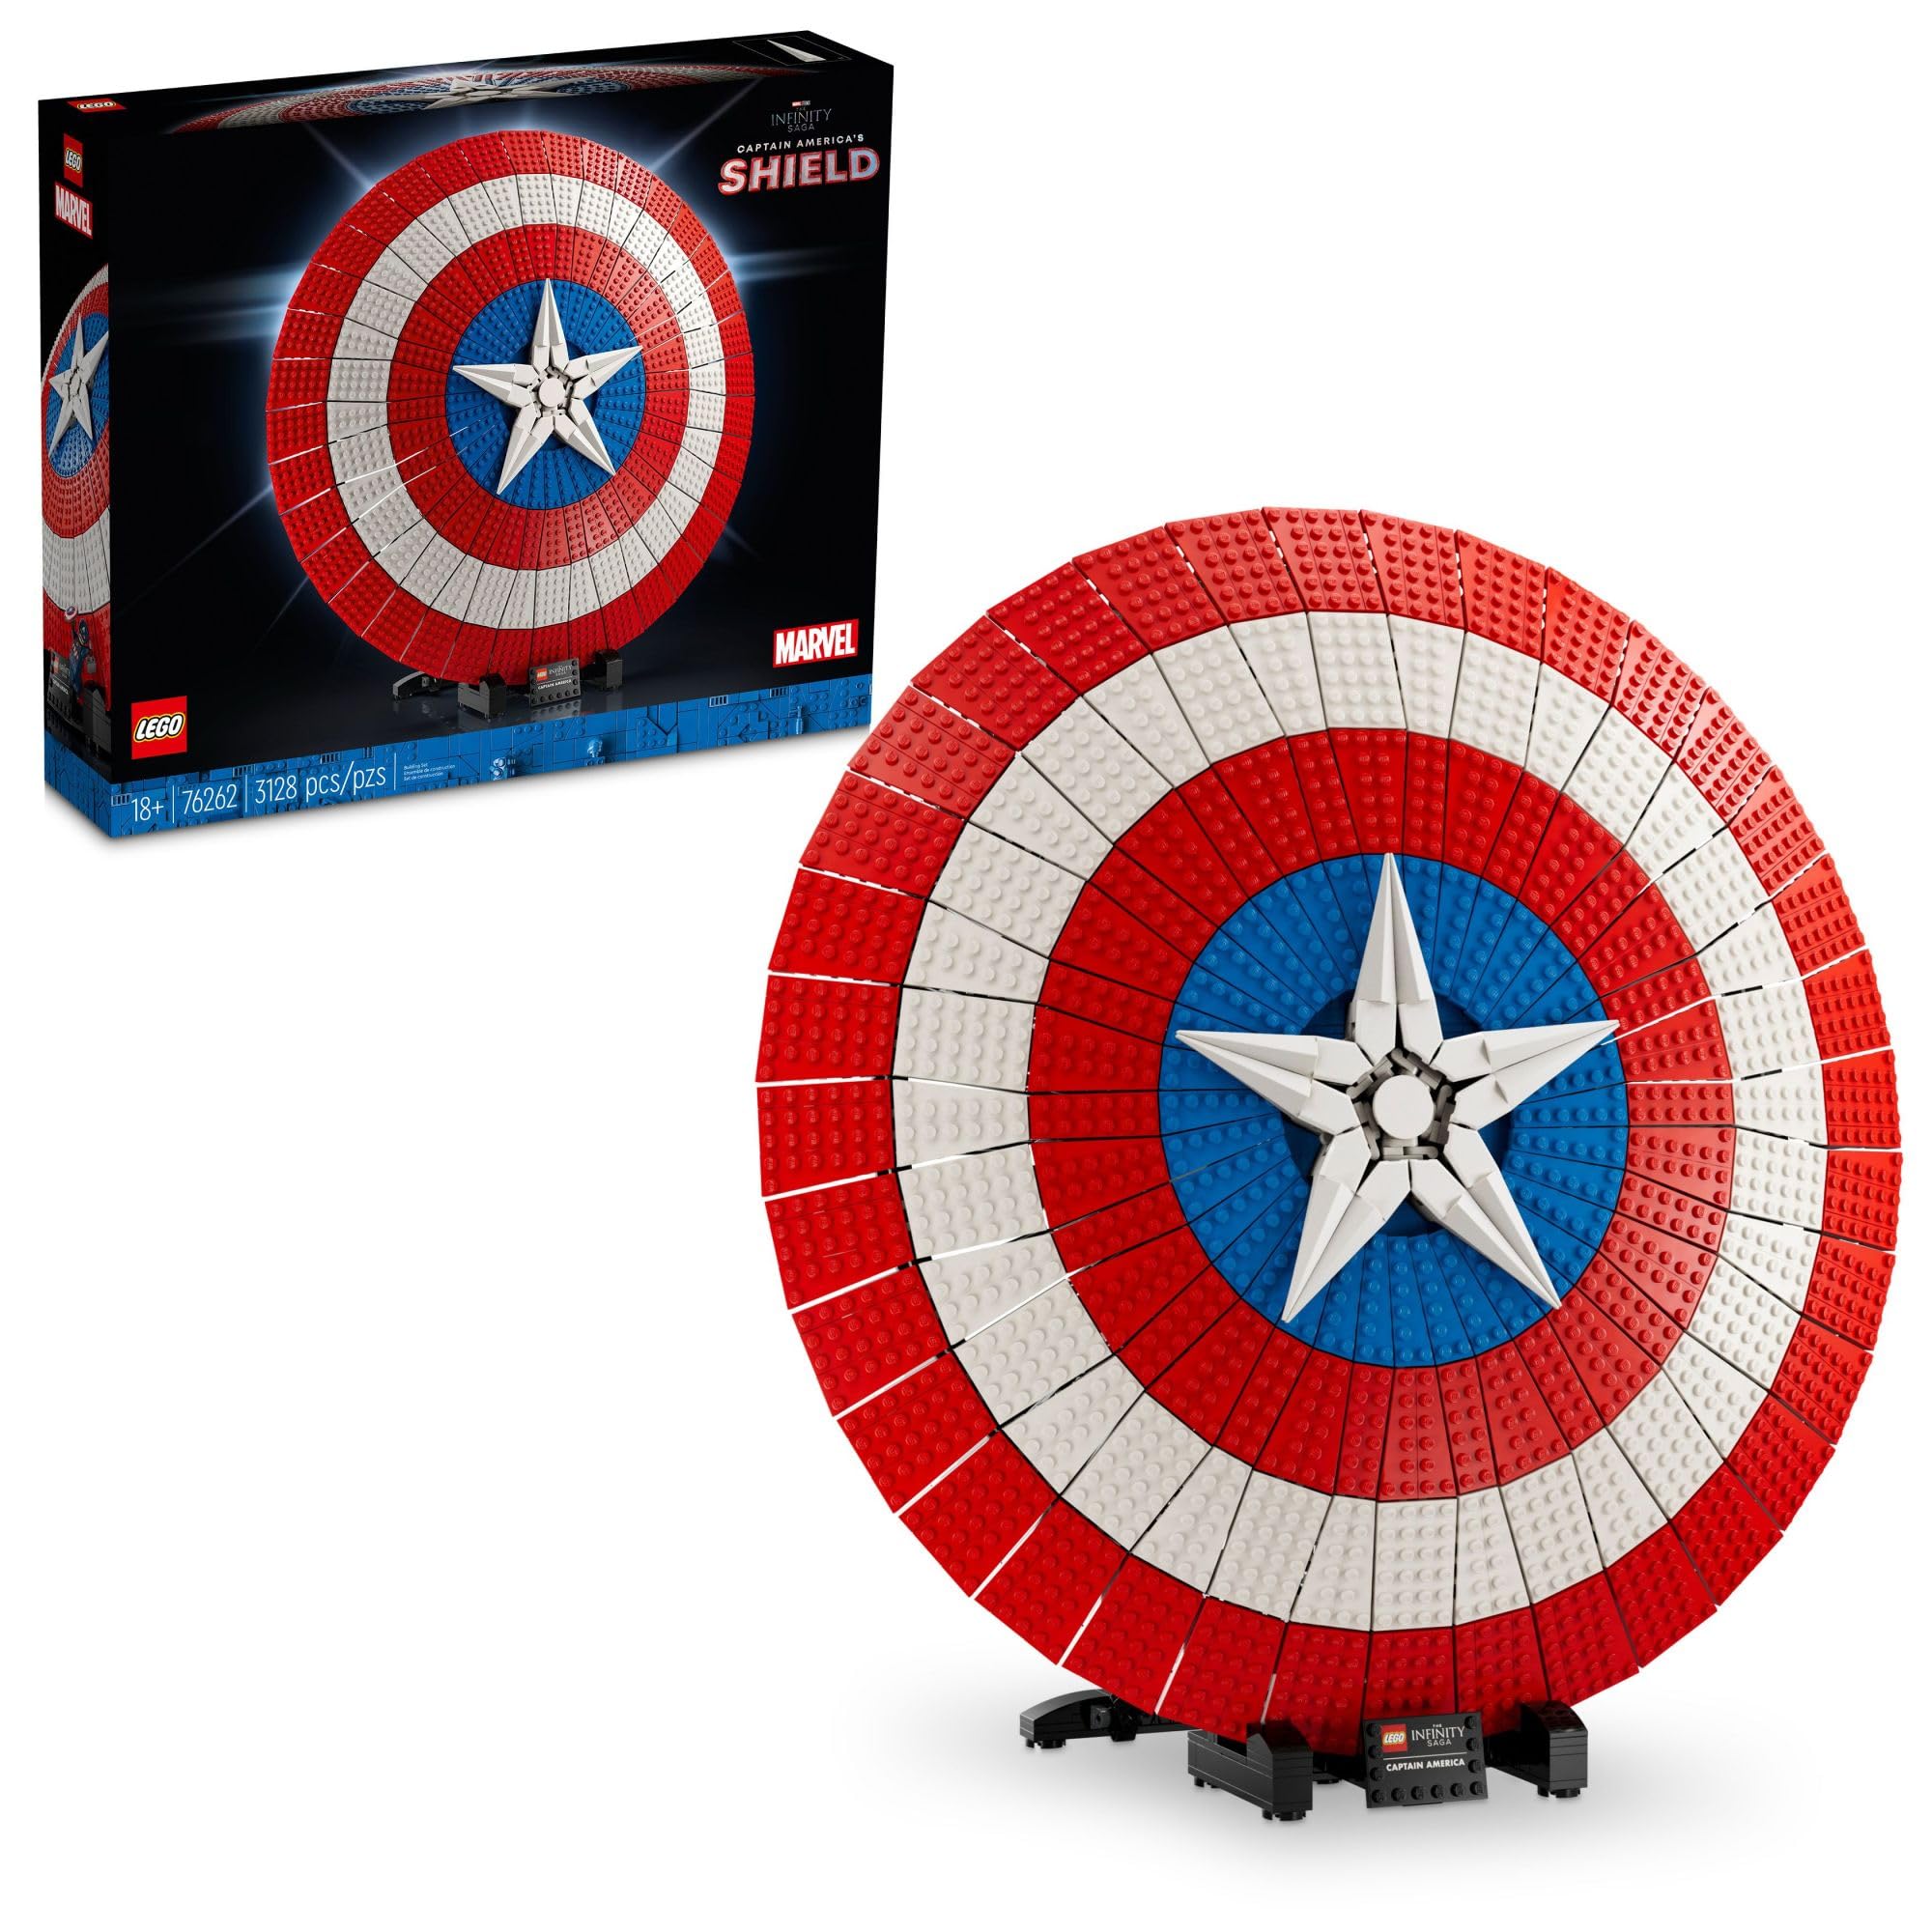 LEGO Marvel 美洲队长盾牌 76262 成人模型套装，美国队长标志性盾牌的收藏复制品，这款迪士尼 Marvel 成人拼搭套装是送给 Marvel 粉丝的绝佳礼物